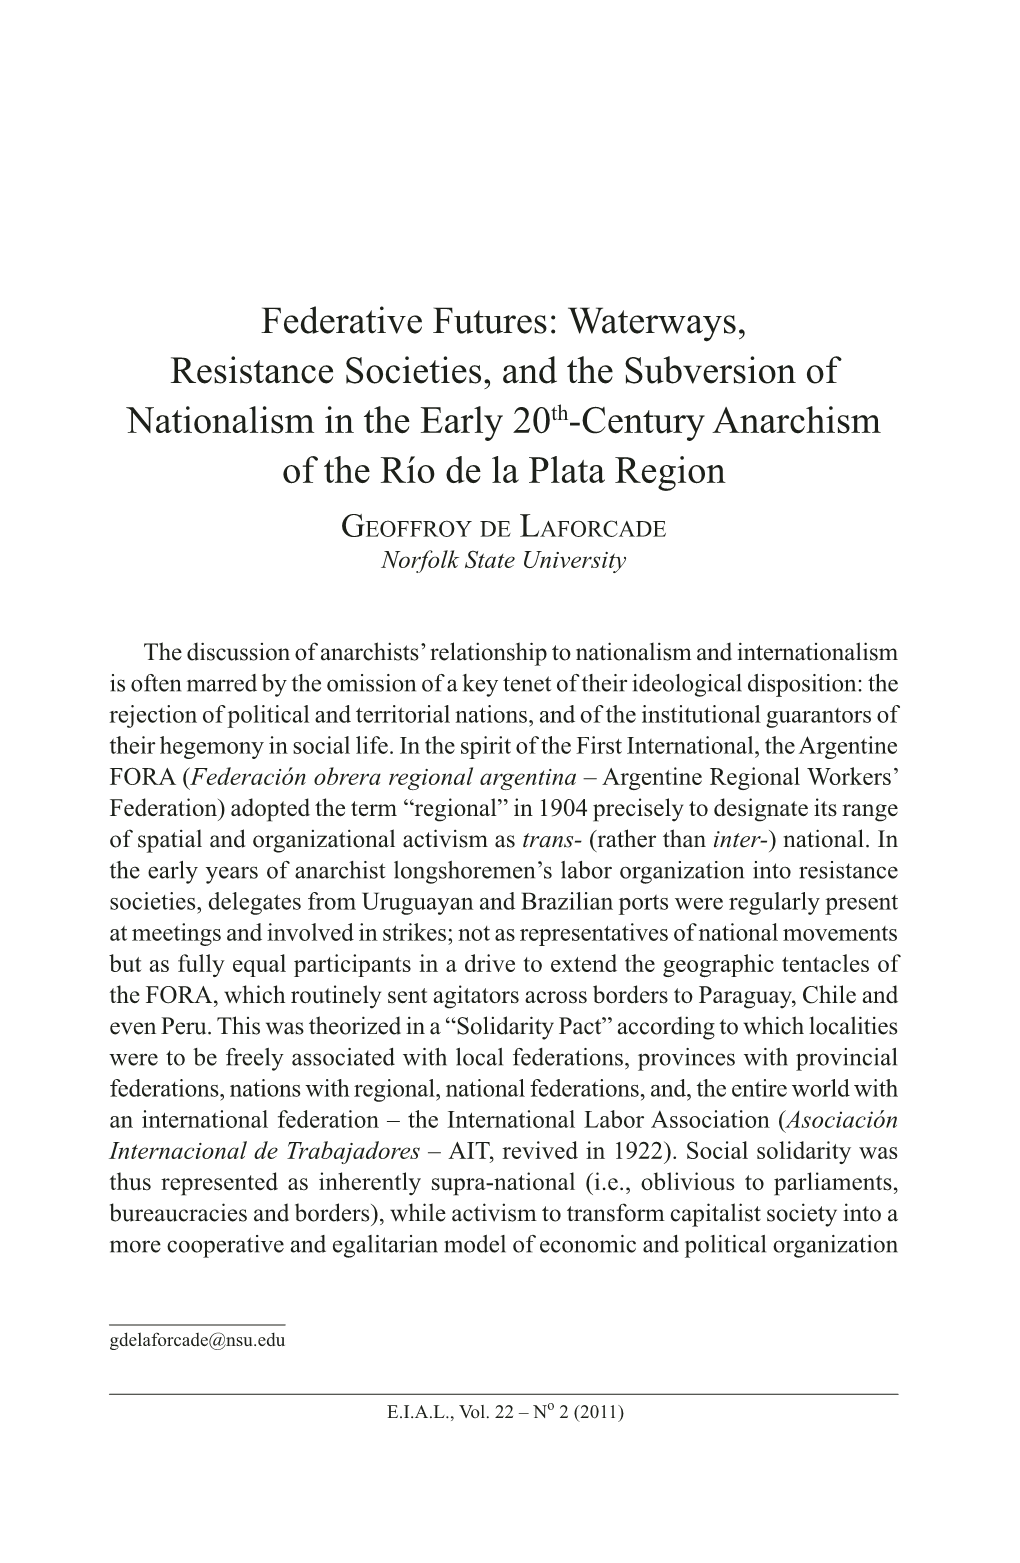 Federative Futures: Waterways, Resistance Societies, And